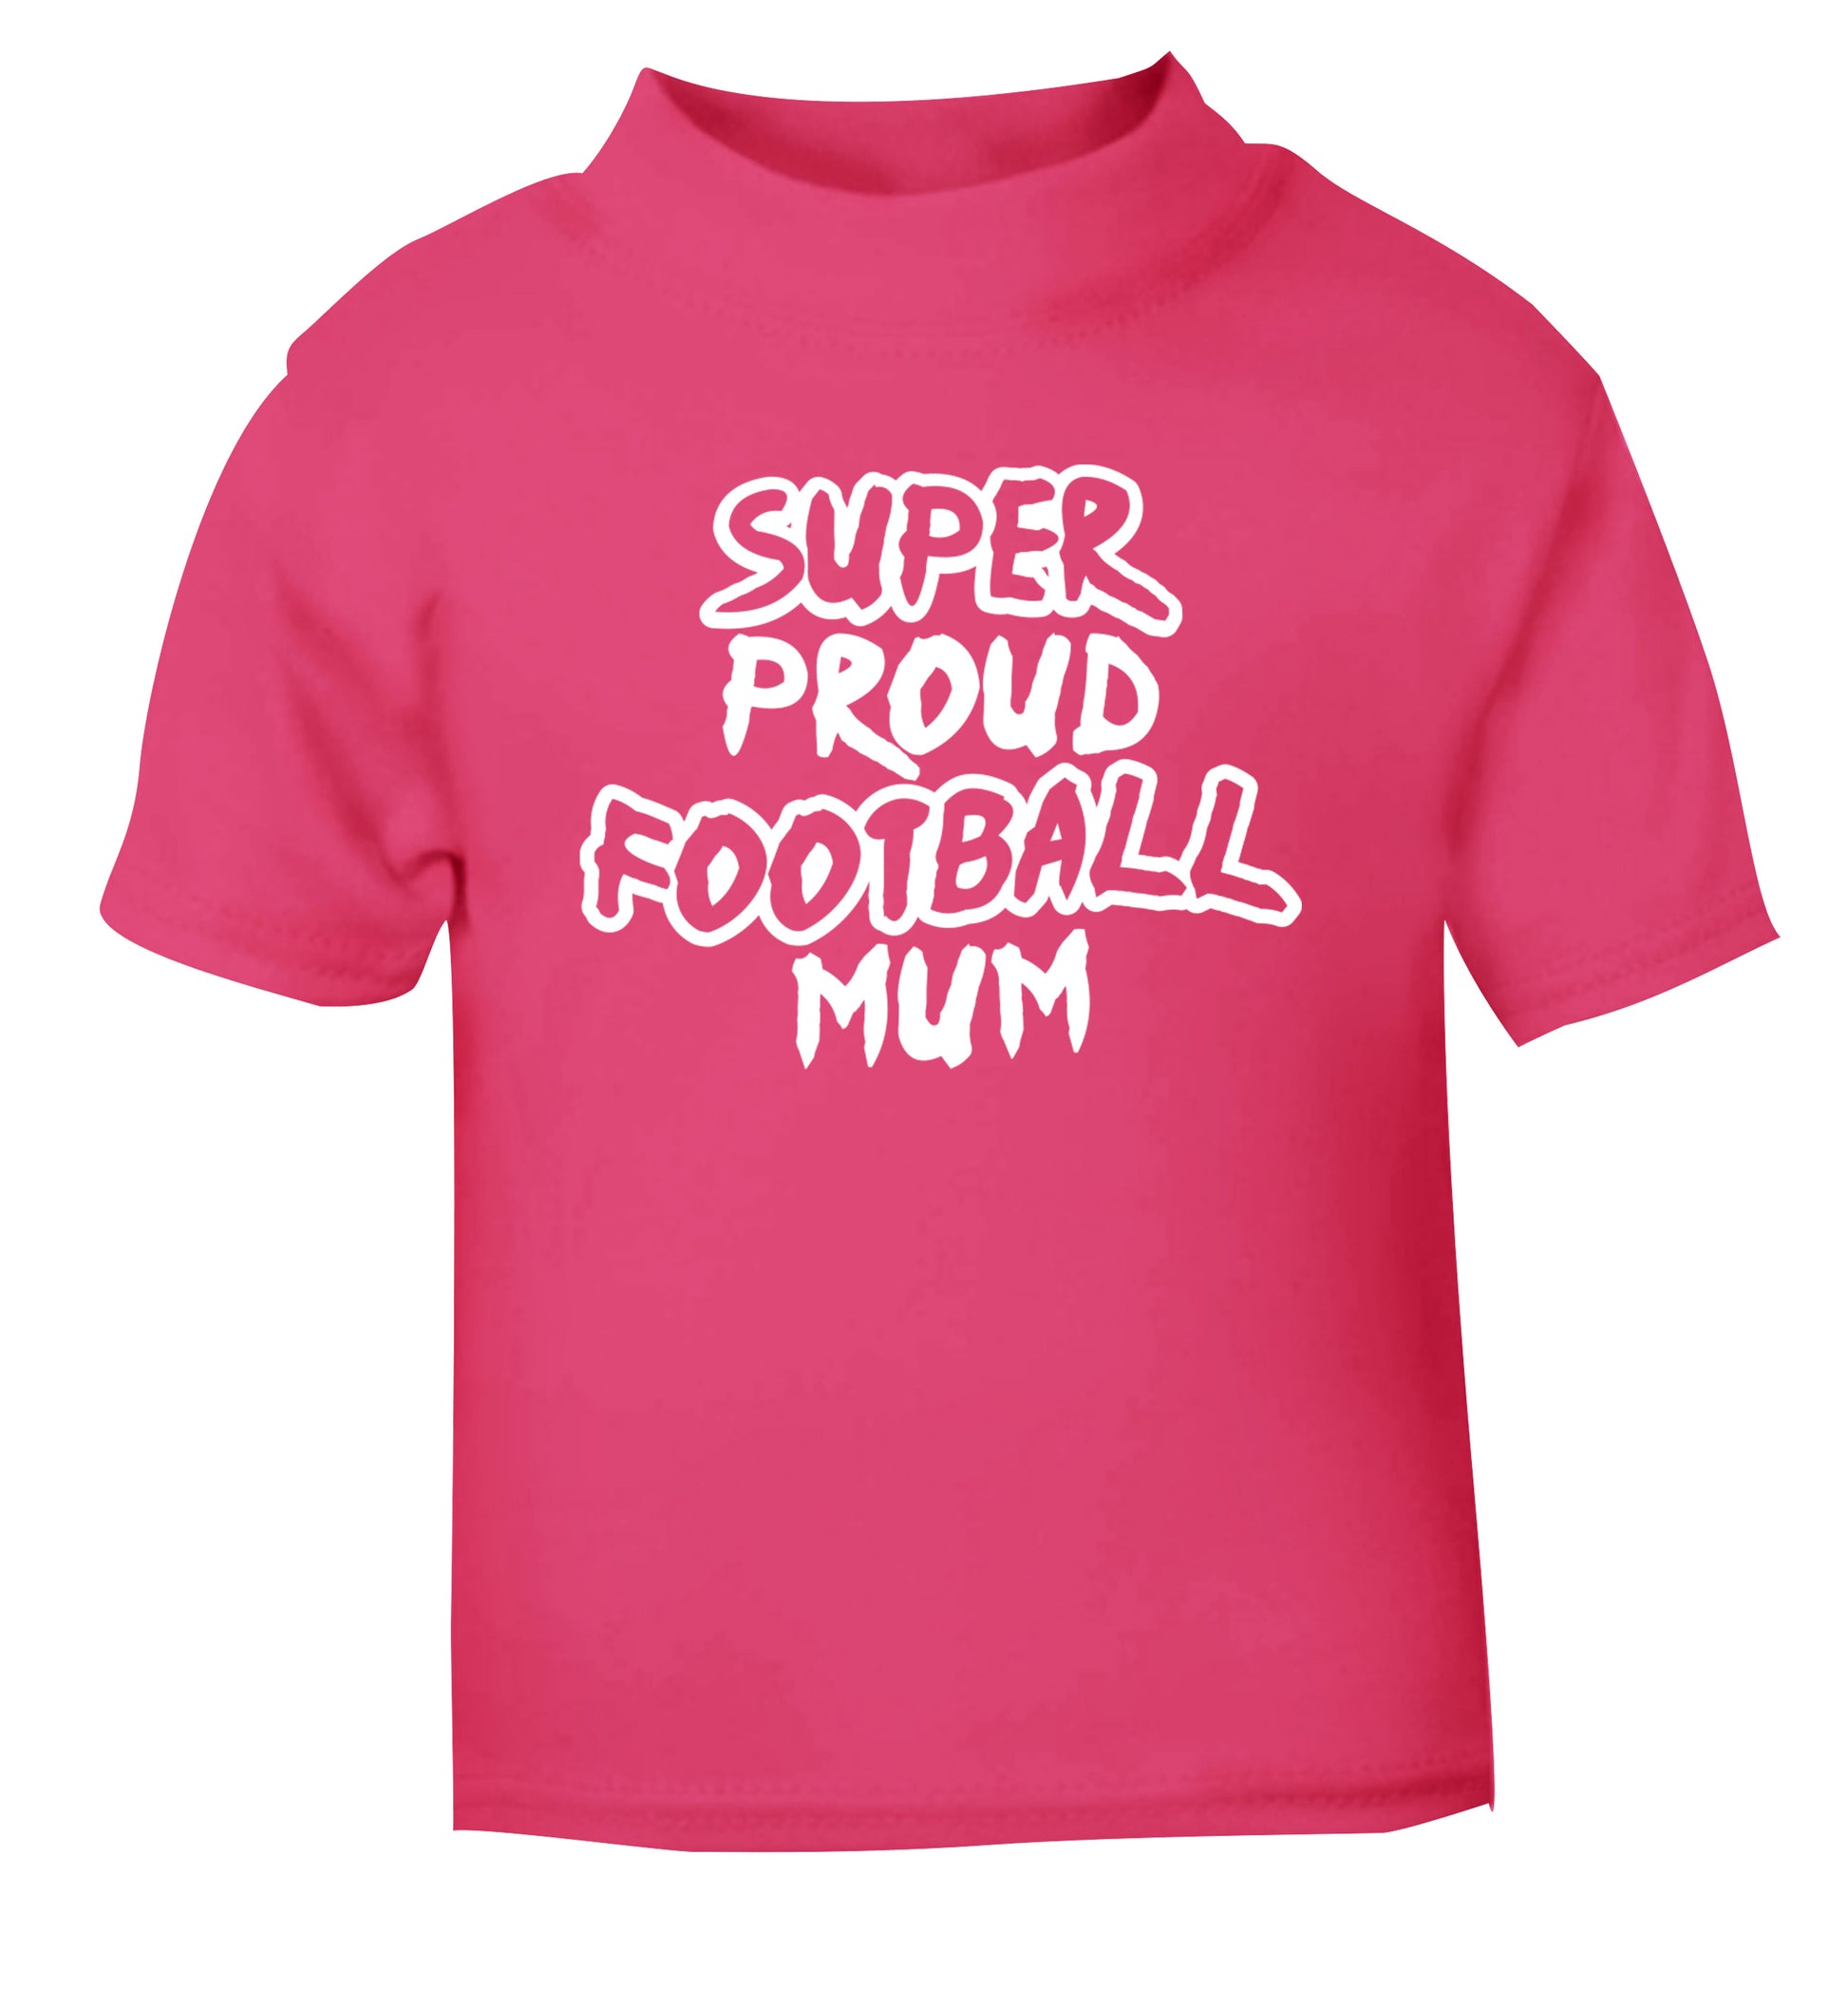 Super proud football mum pink Baby Toddler Tshirt 2 Years